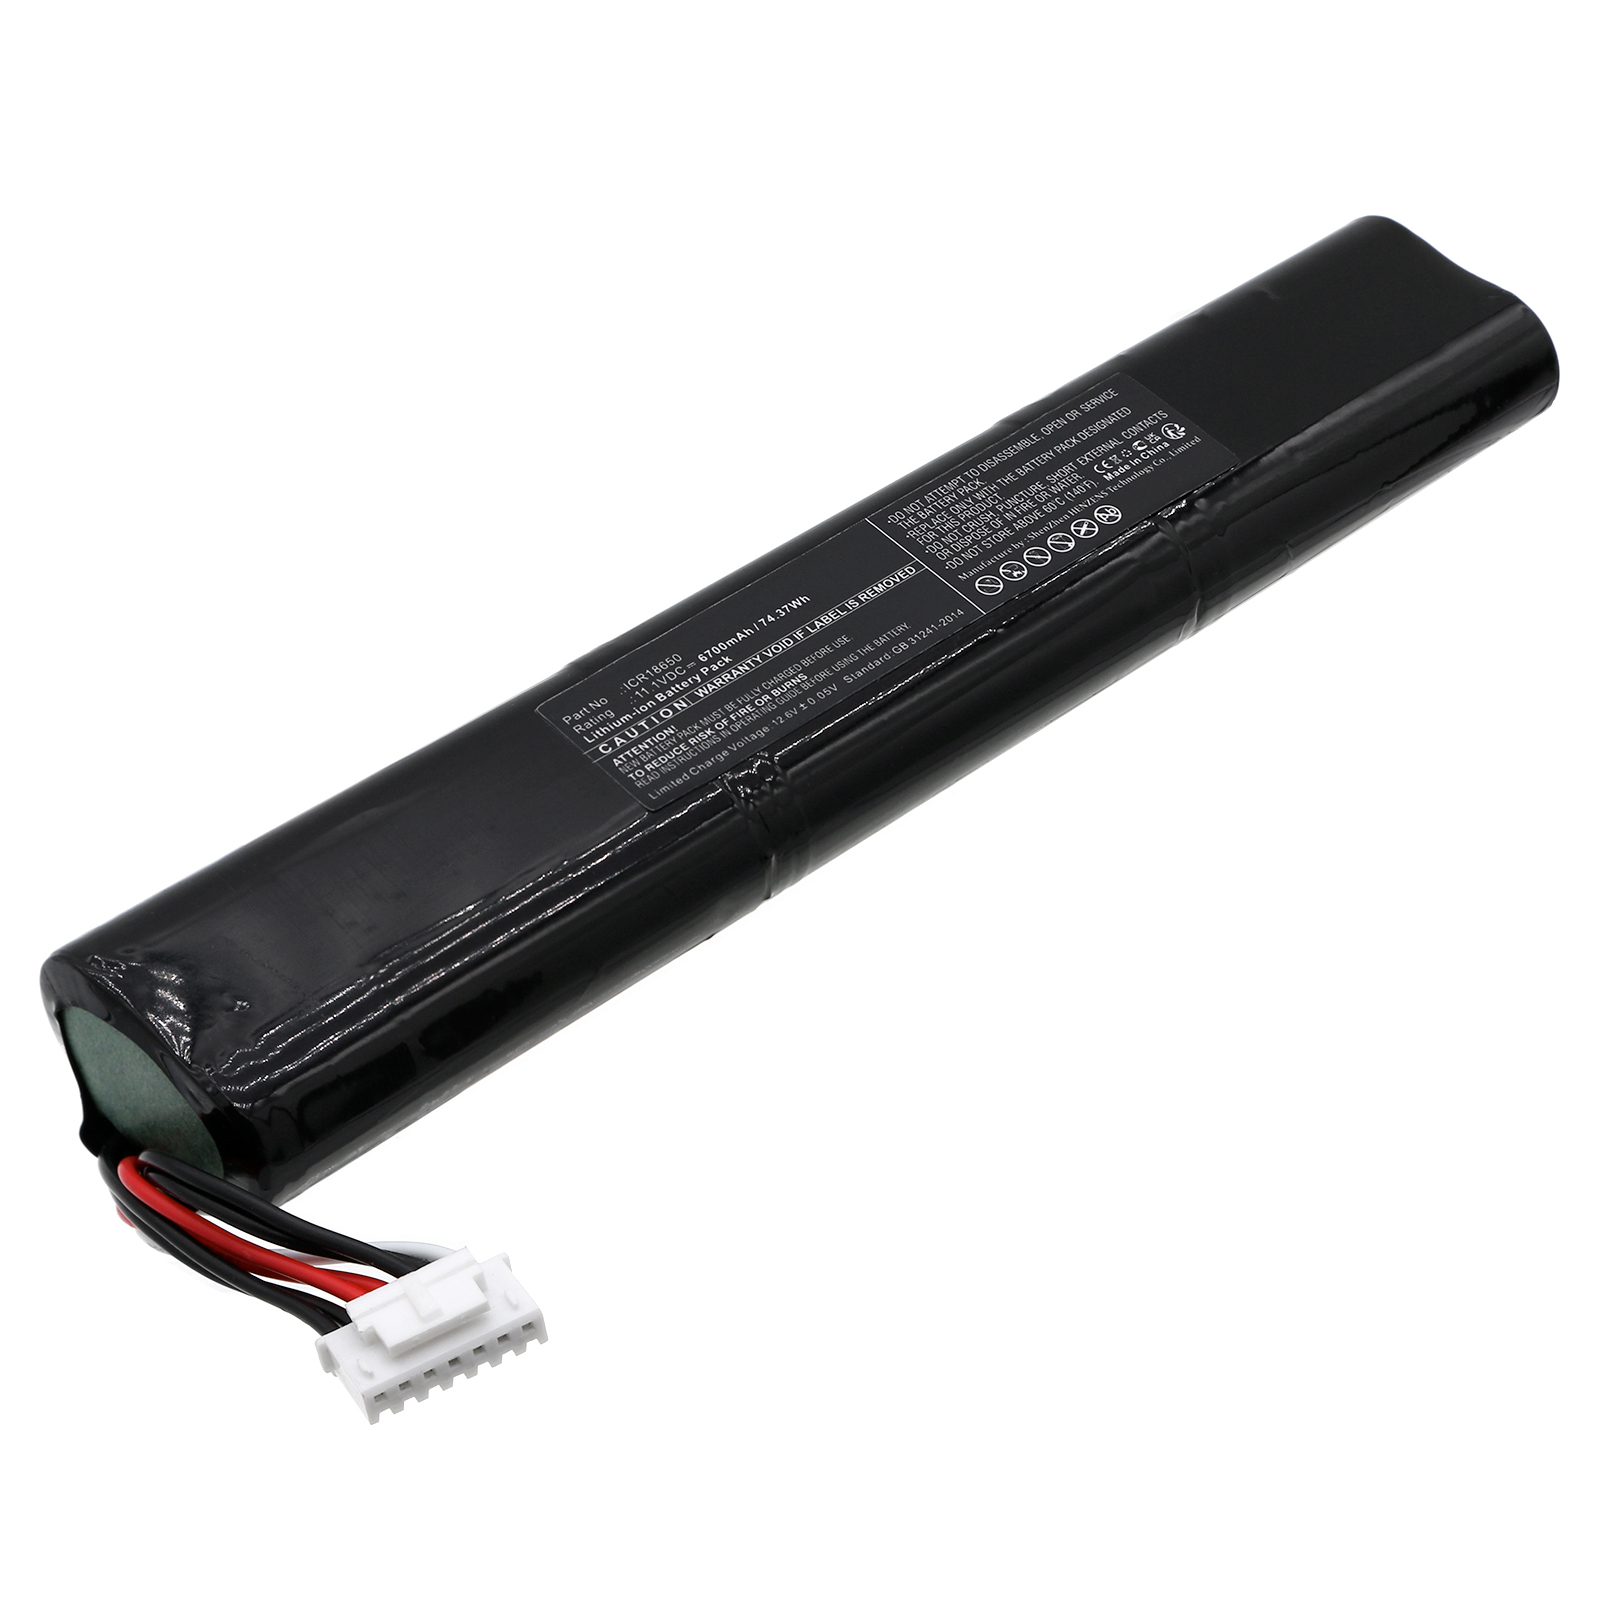 Synergy Digital Speaker Battery, Compatible with Teufel ICR18650 Speaker Battery (Li-ion, 11.1V, 6700mAh)